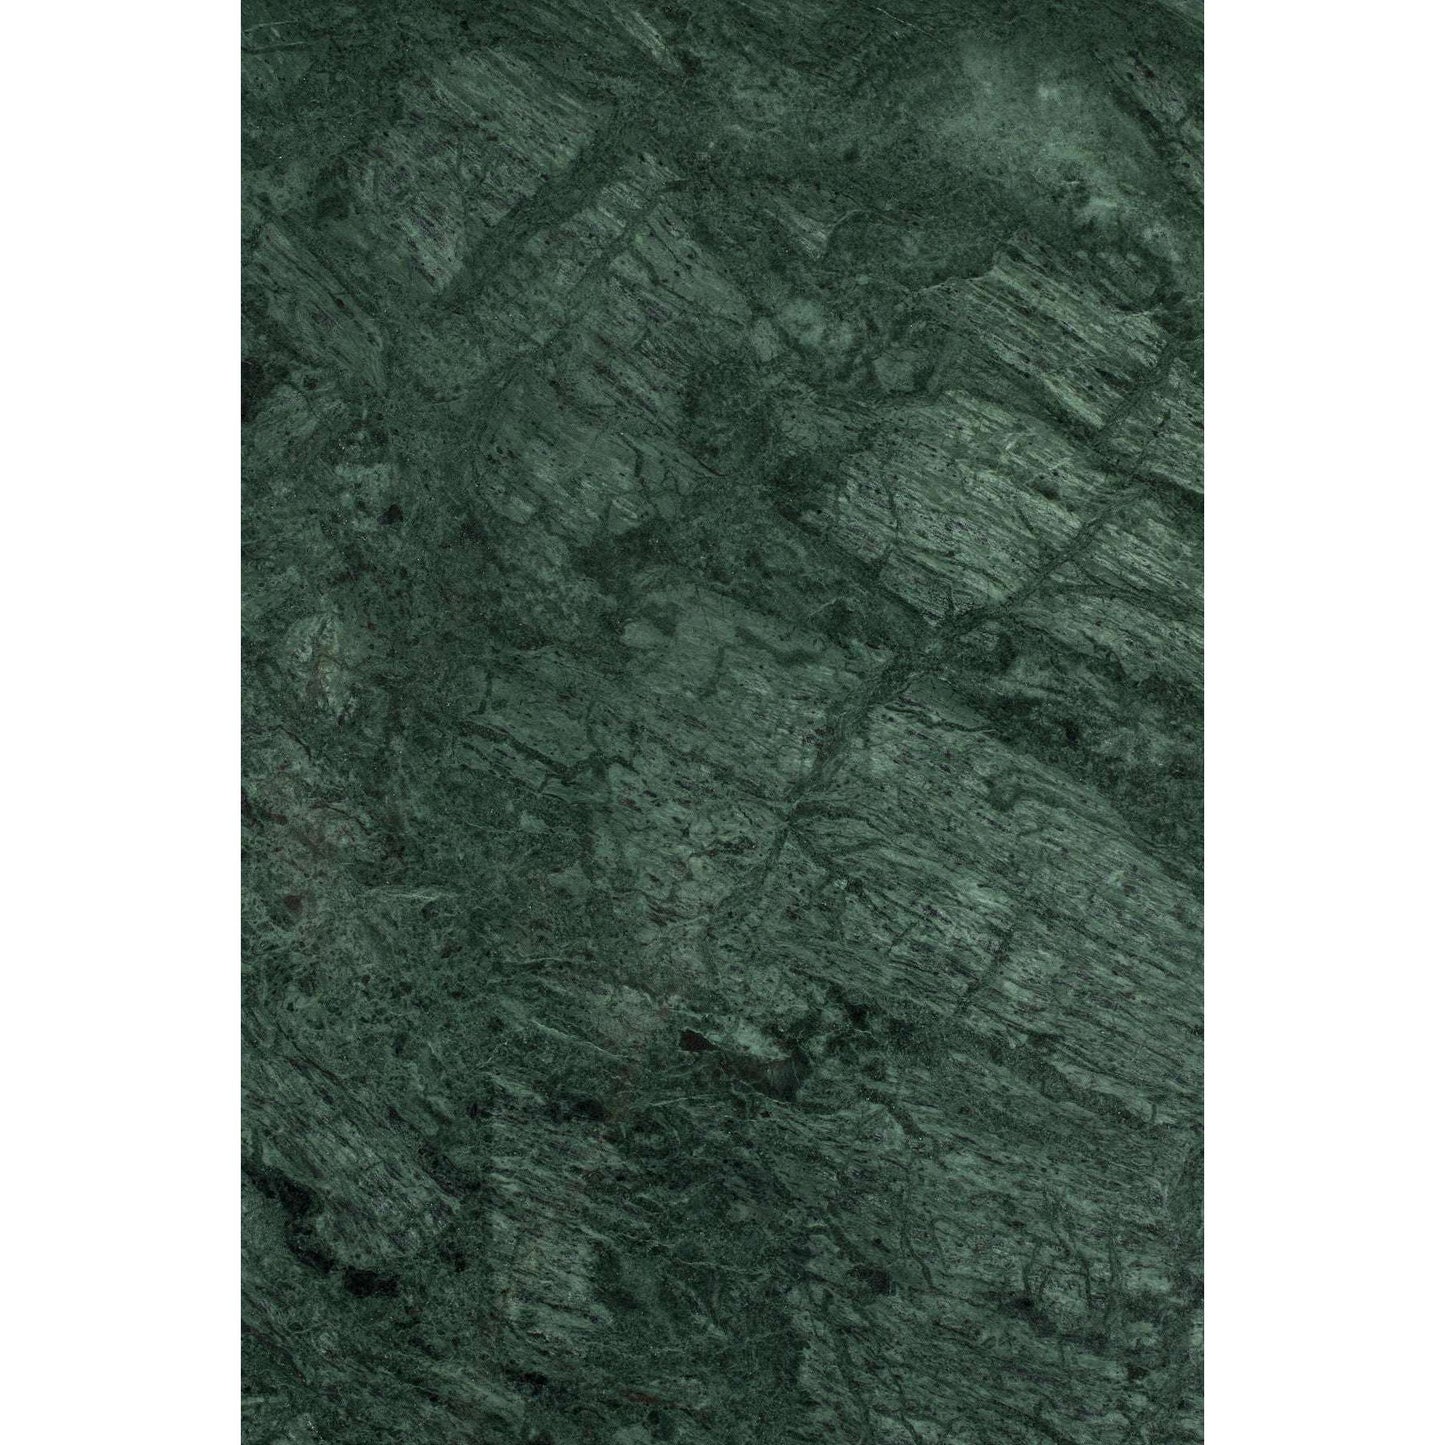 Staerkk salontafel timpa marmer groen Ø70 x  40 cm